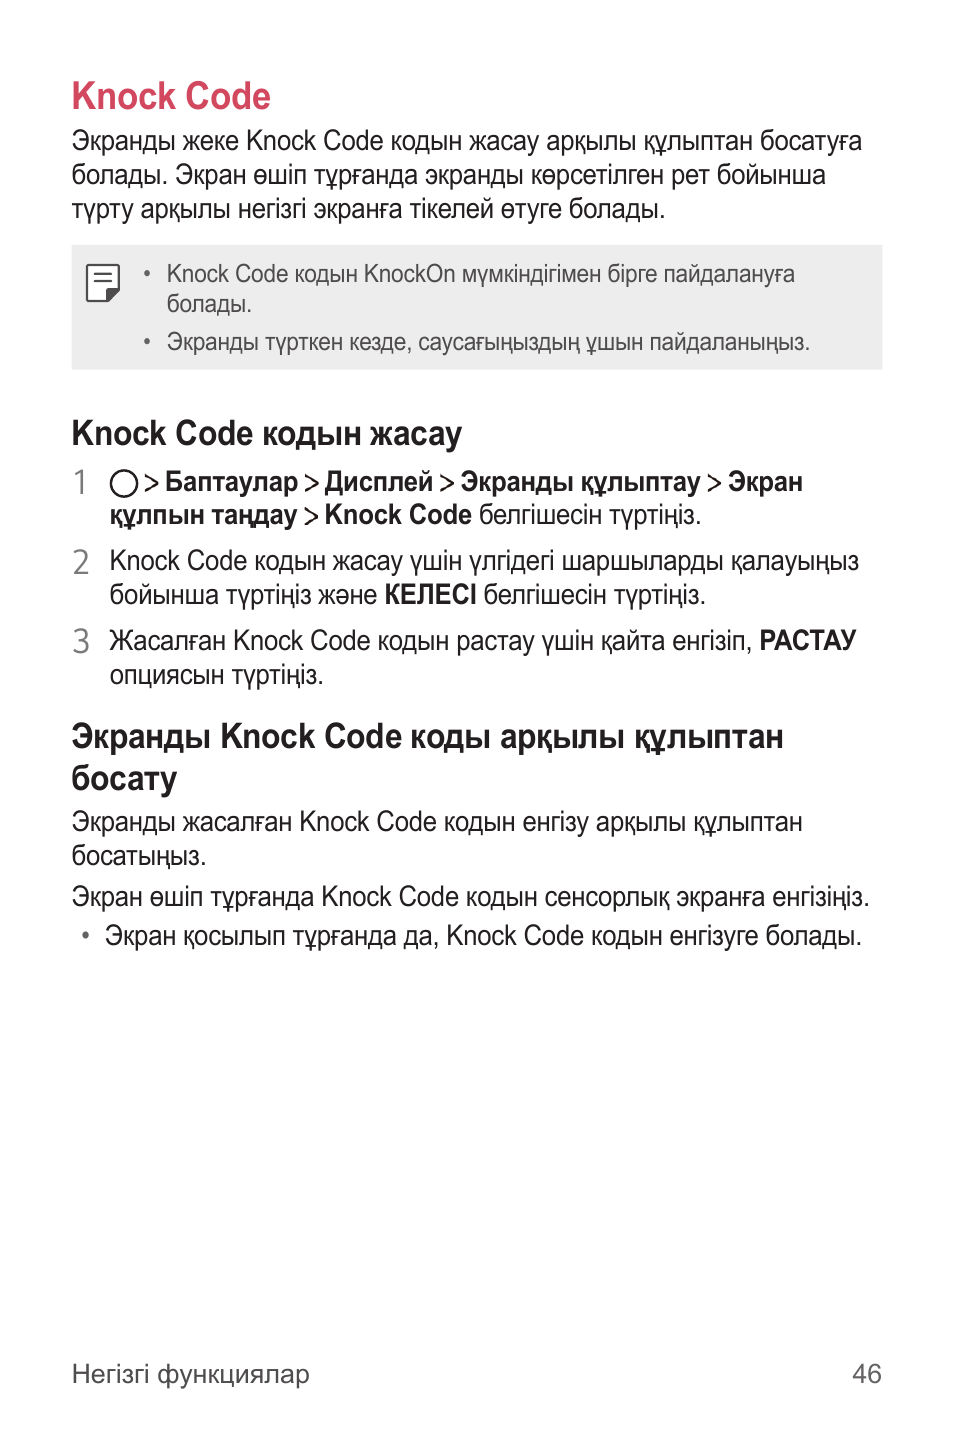 Knock code, Knock code кодын жасау, Экранды knock code коды арқылы құлыптан босату | Инструкция по эксплуатации LG LGM320 X power 2 | Страница 294 / 493